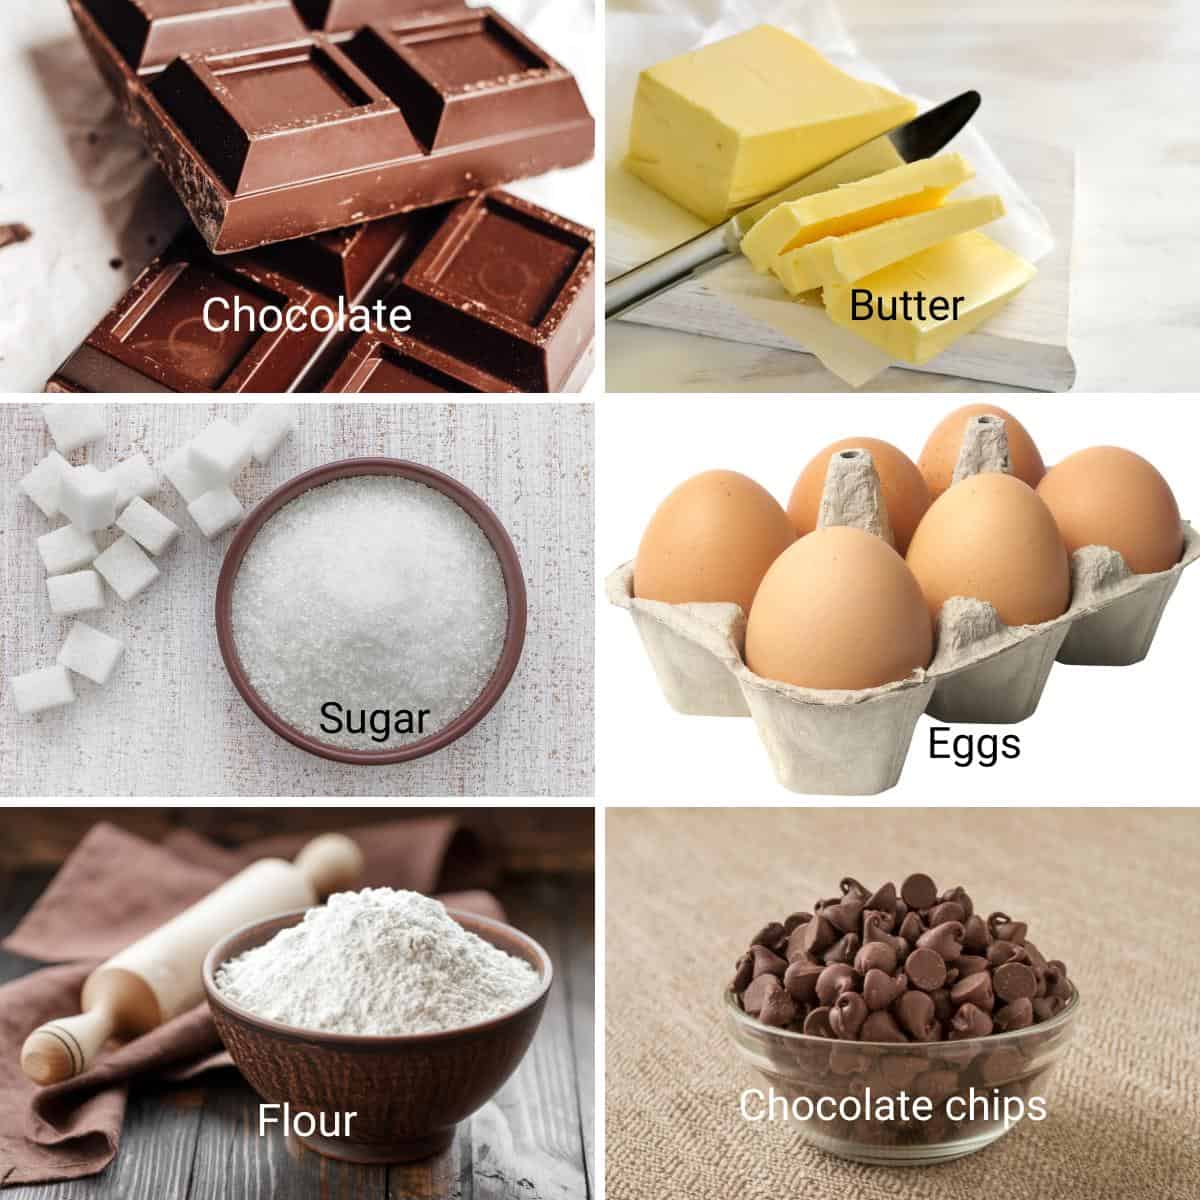 Ingredients for making chocolate brownies.